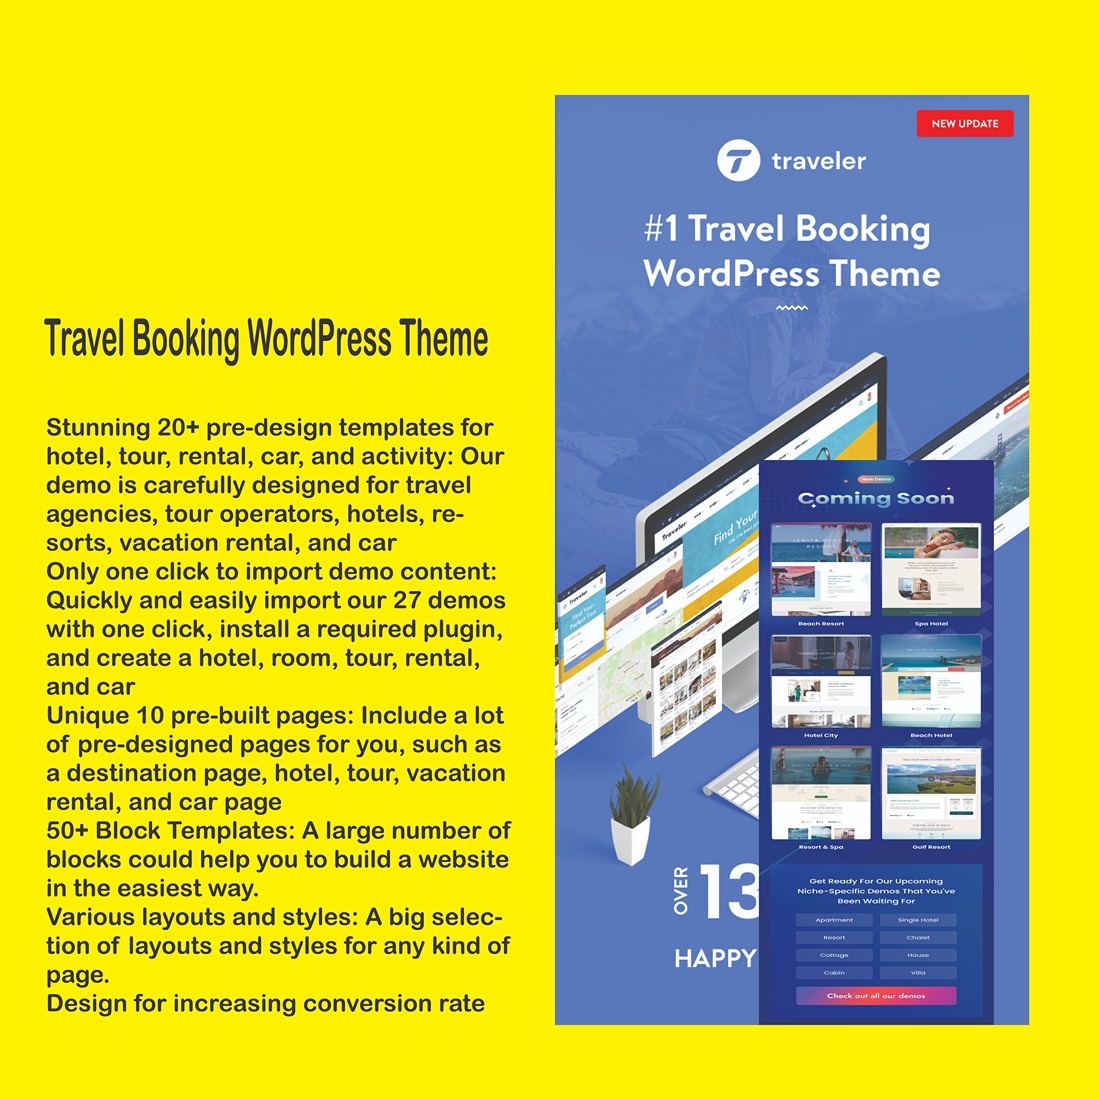 Travel Booking - WordPress Theme preview image.